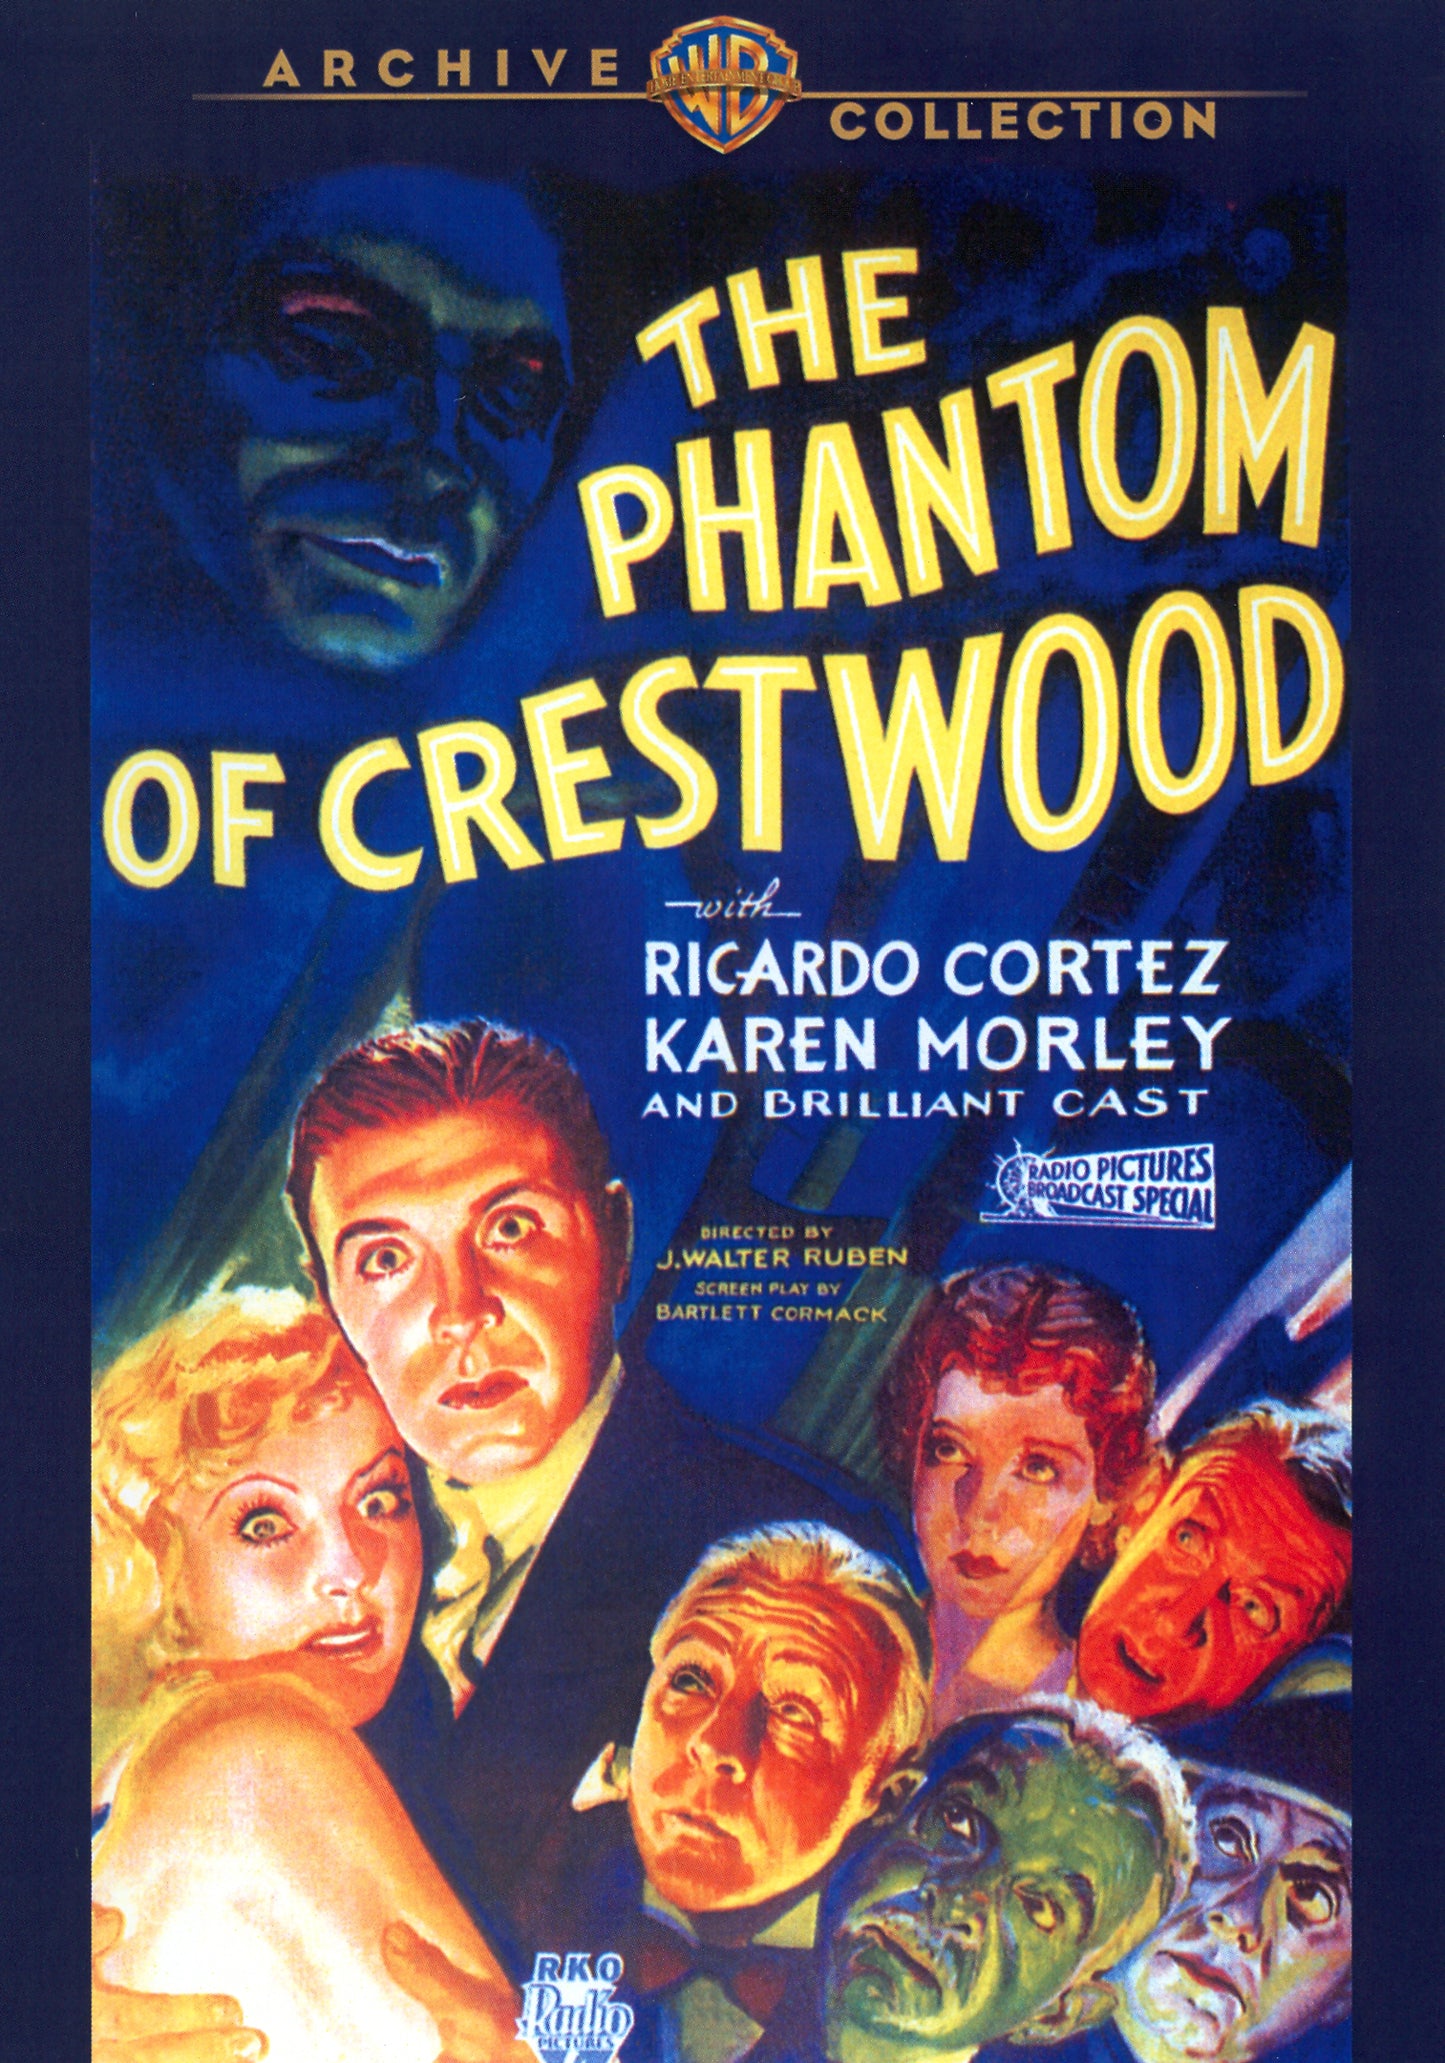 Phantom of Crestwood cover art